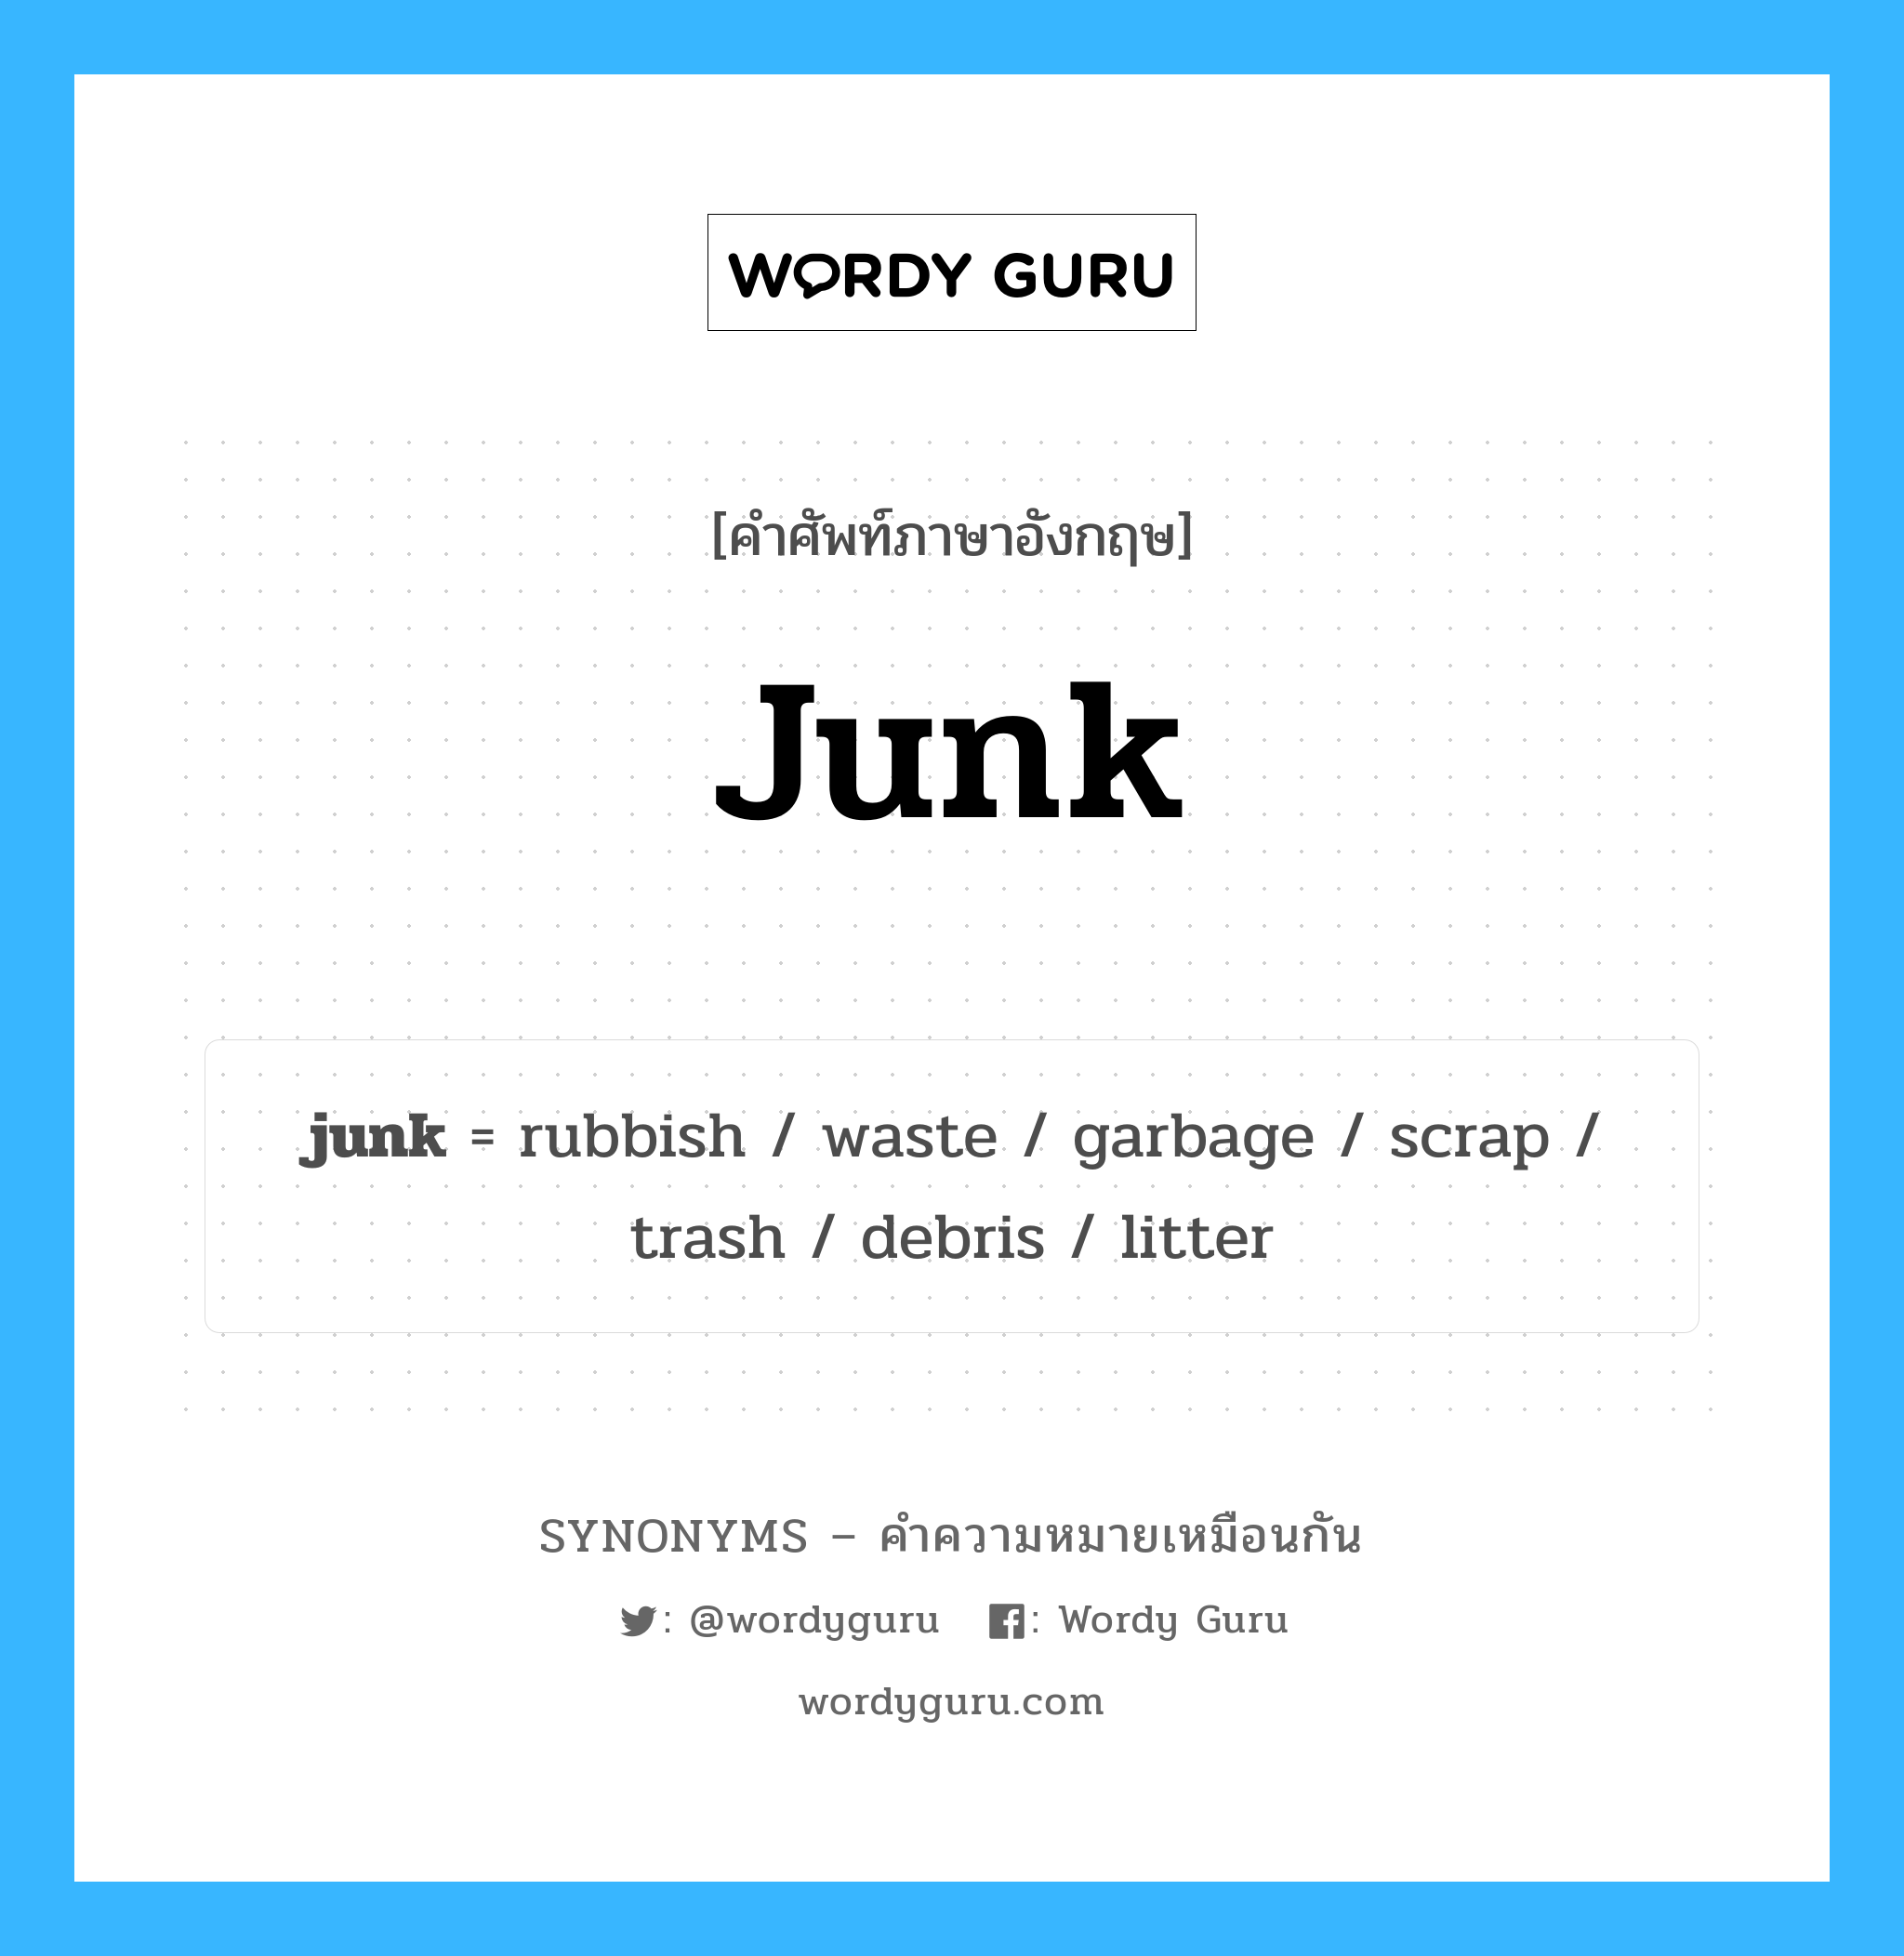 litter เป็นหนึ่งใน junk และมีคำอื่น ๆ อีกดังนี้, คำศัพท์ภาษาอังกฤษ litter ความหมายคล้ายกันกับ junk แปลว่า ครอก หมวด junk